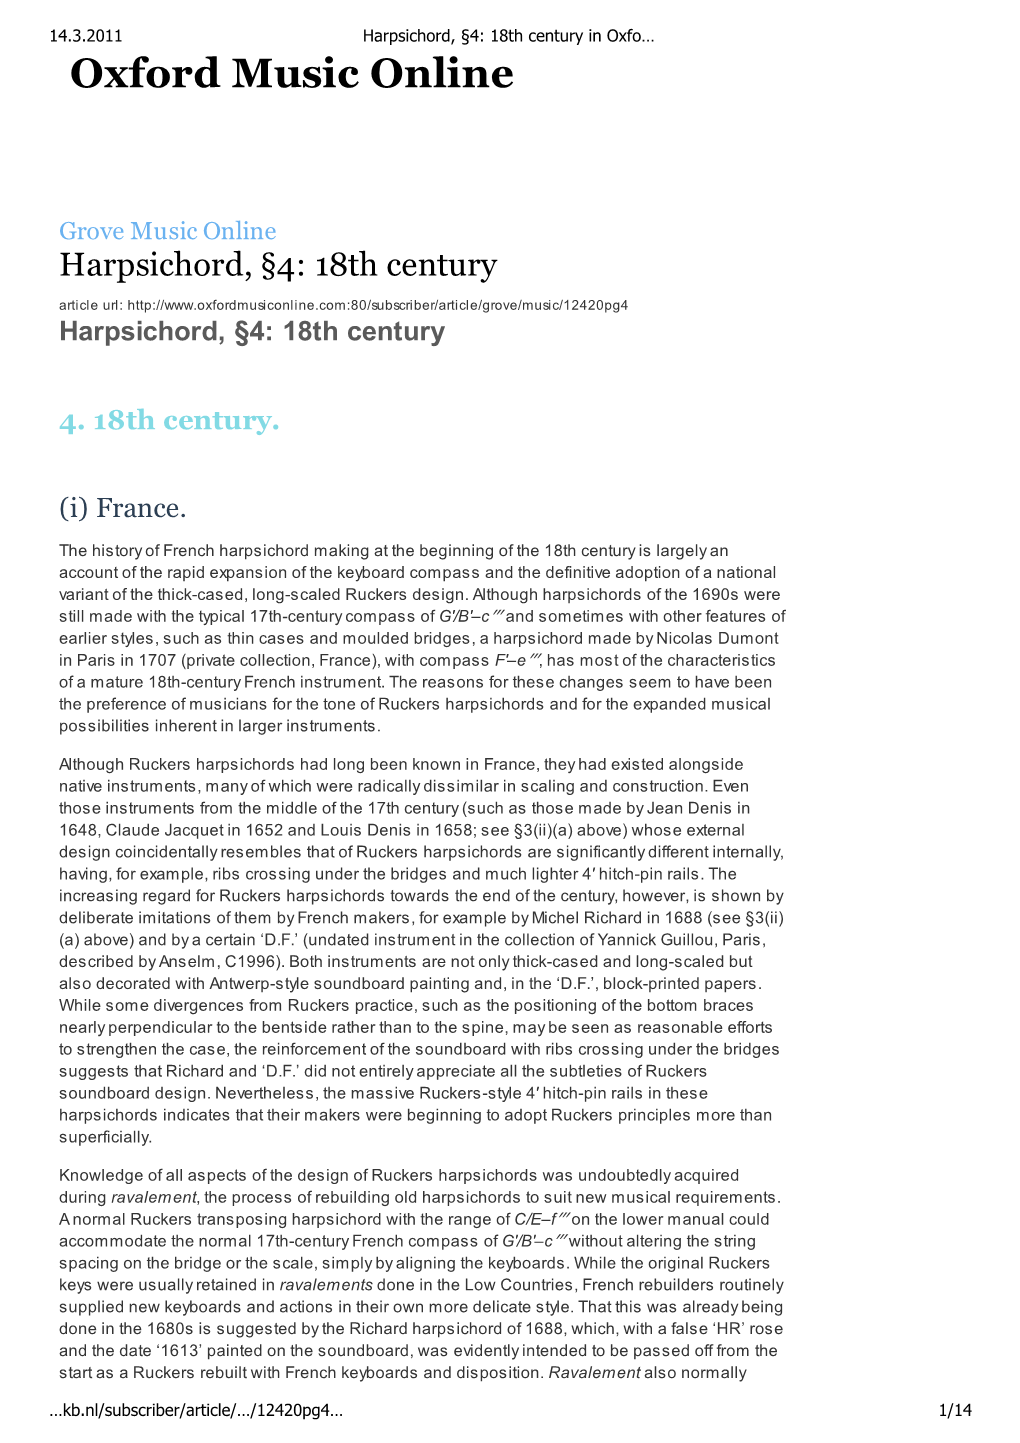 Harpsichord, 4 18Th Century in Oxford Music Online